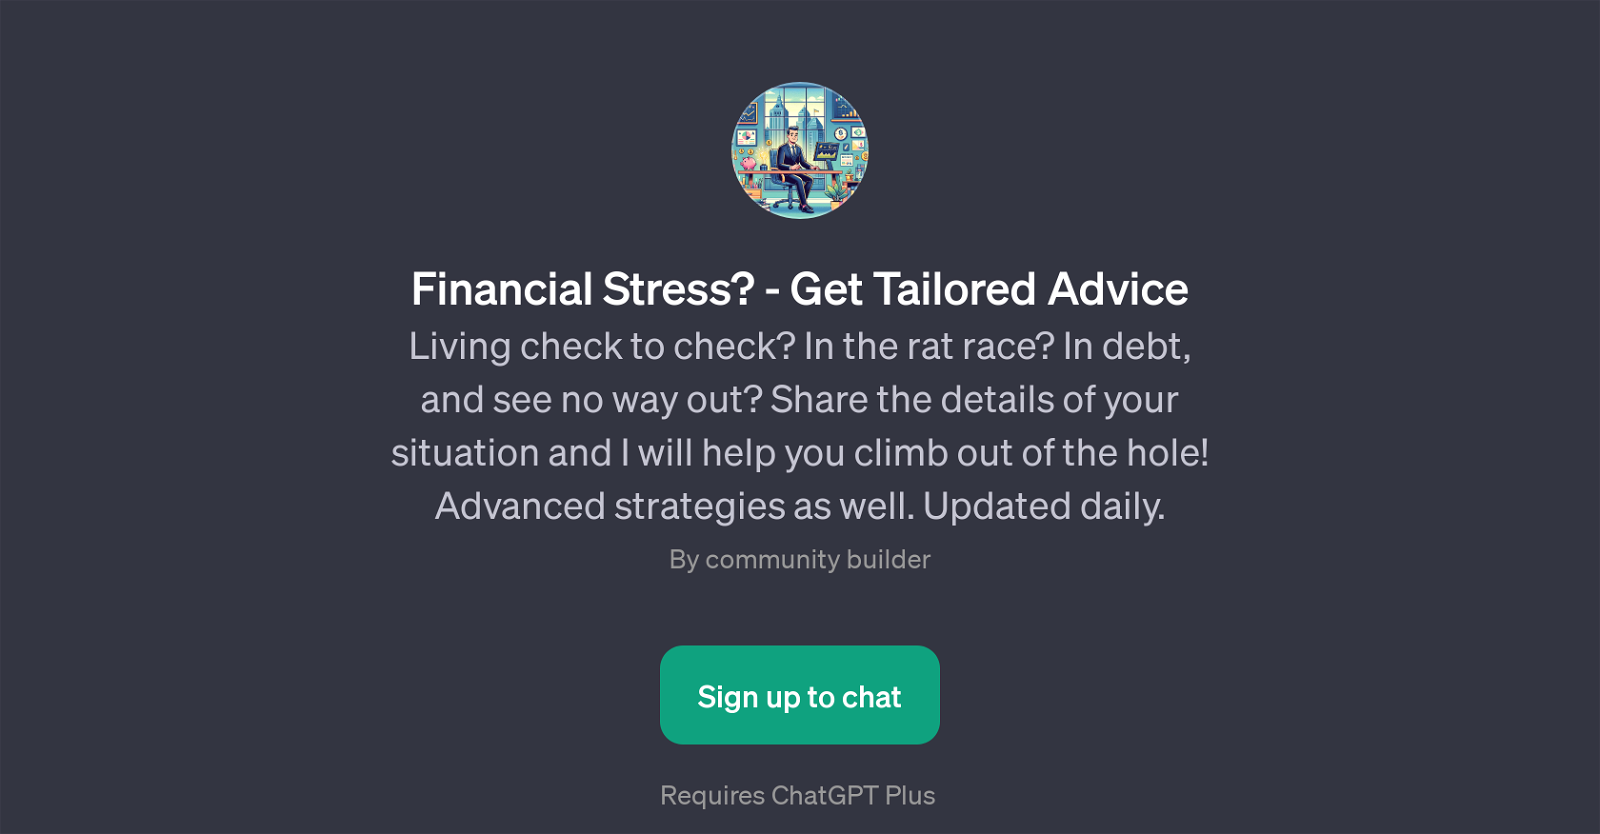 Financial Stress? - Get Tailored Advice website